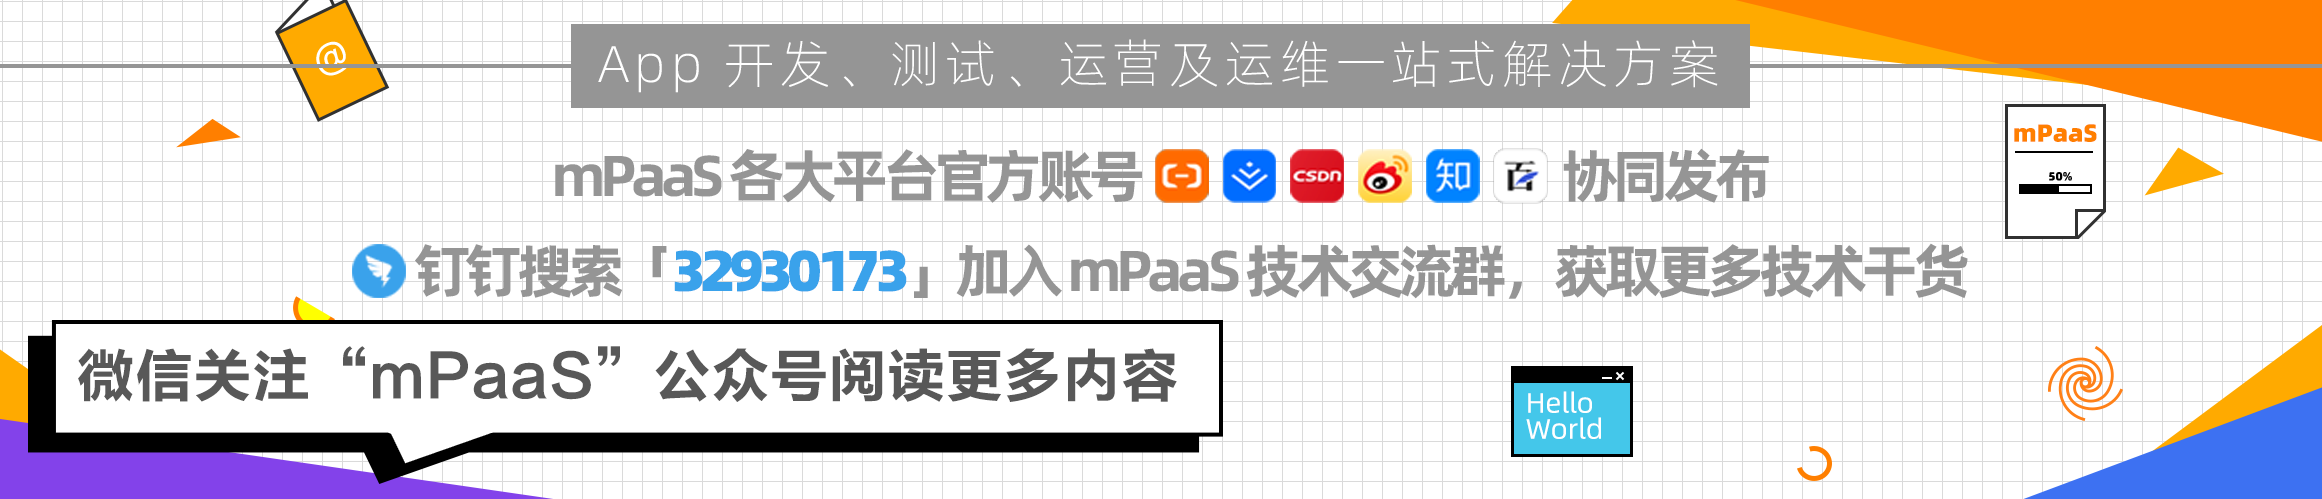 mPaaS 月度小报 | CodeHub#4 在线教育应用的开发实践；香港站正-鸿蒙开发者社区